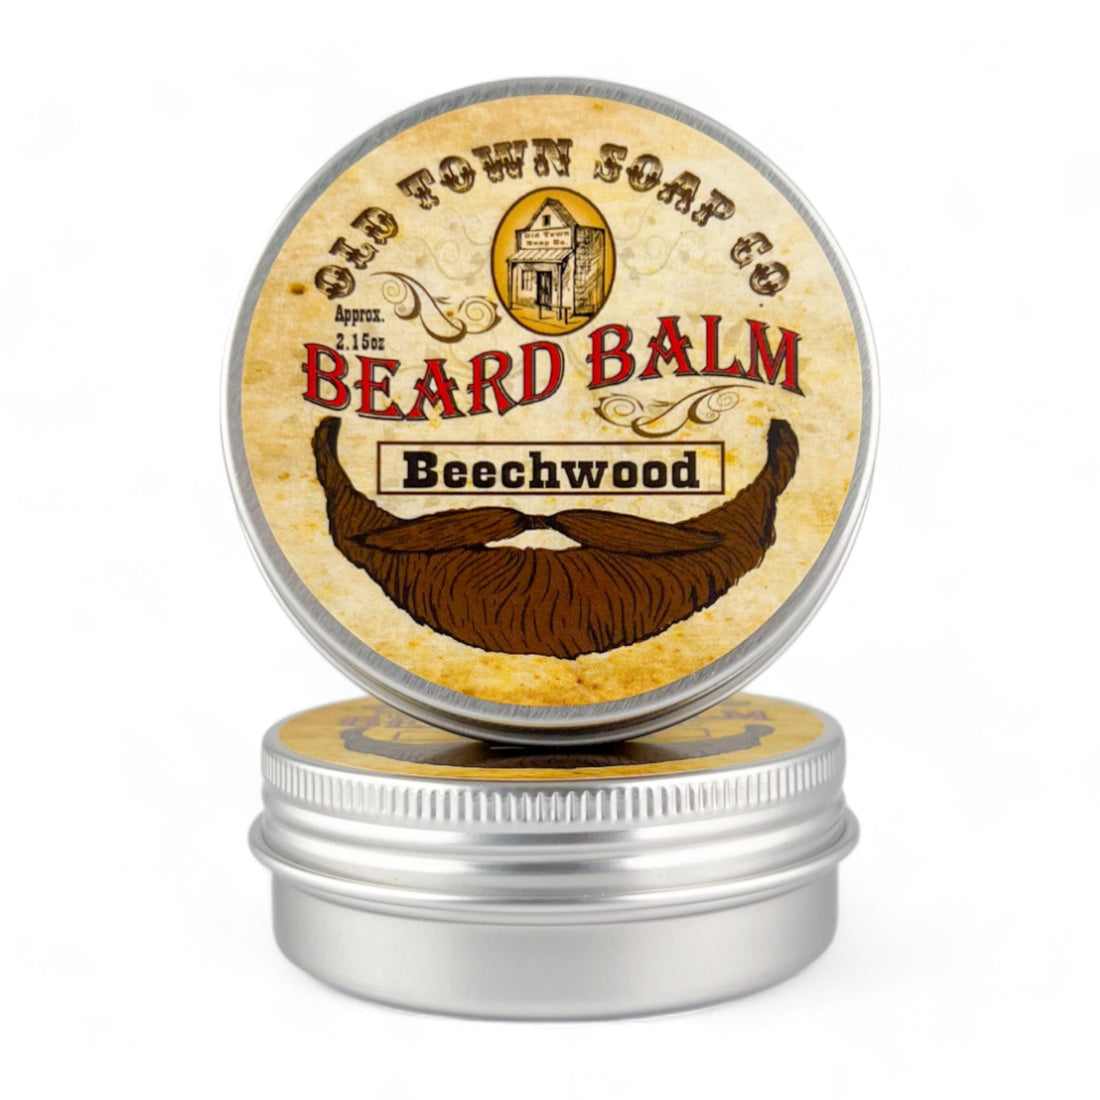 Beechwood Beard Balm - Old Town Soap Co.